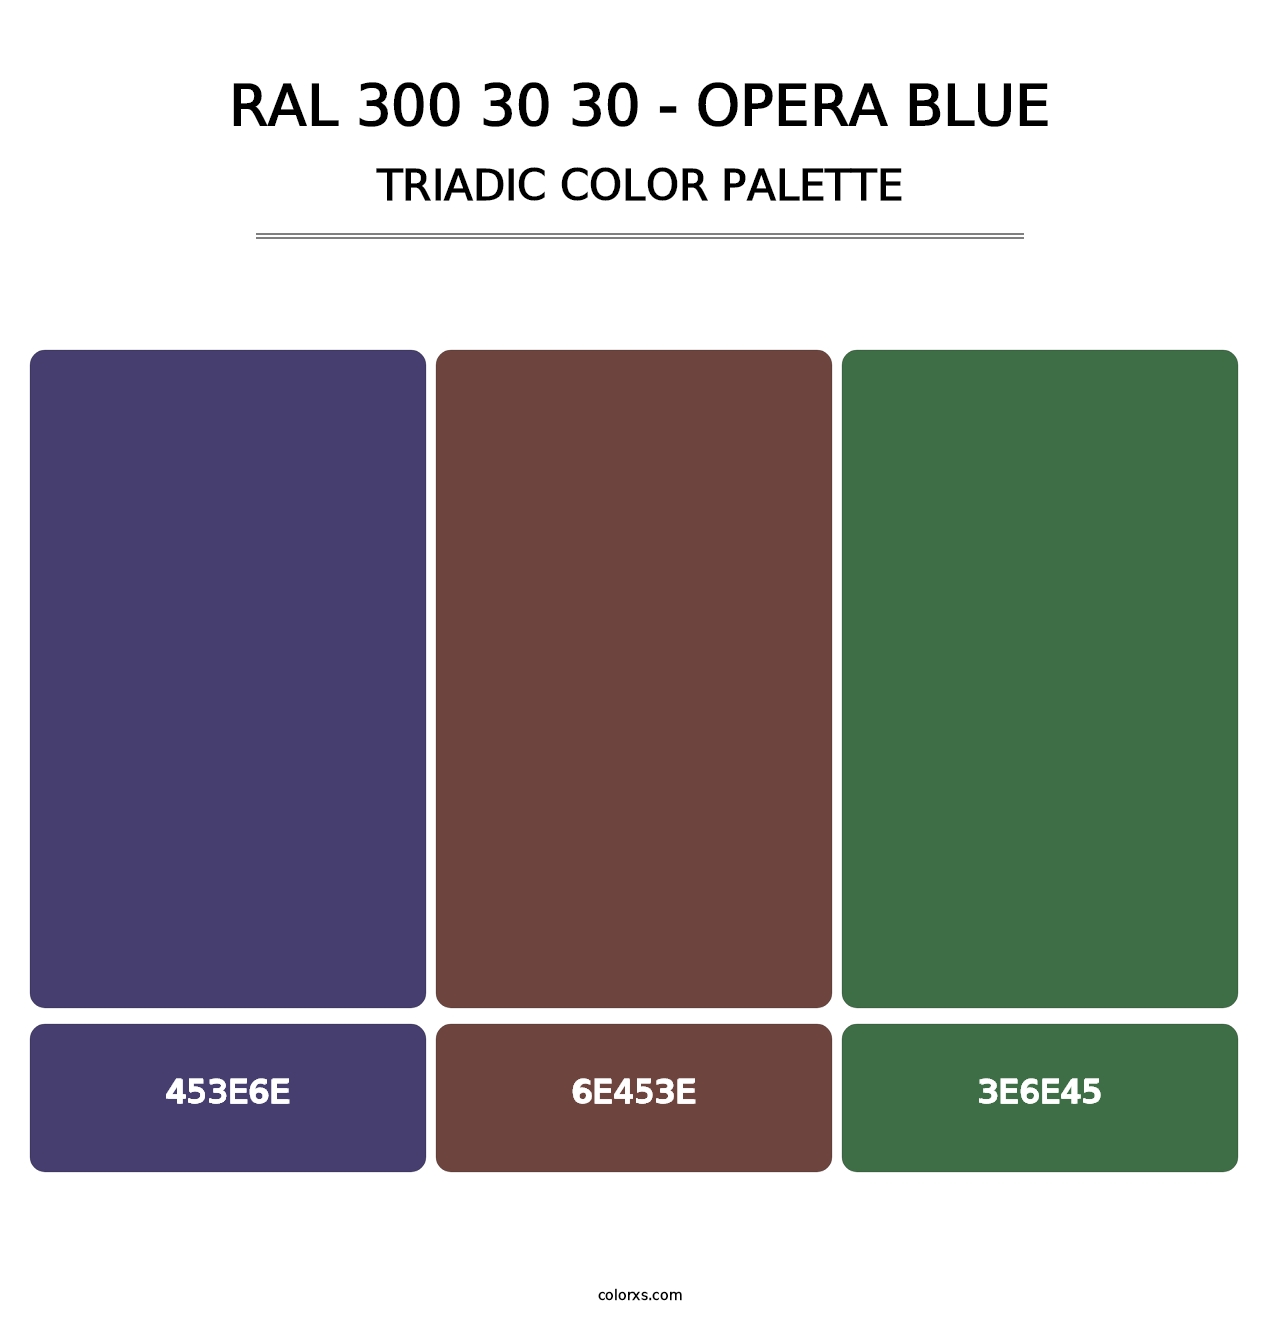 RAL 300 30 30 - Opera Blue - Triadic Color Palette